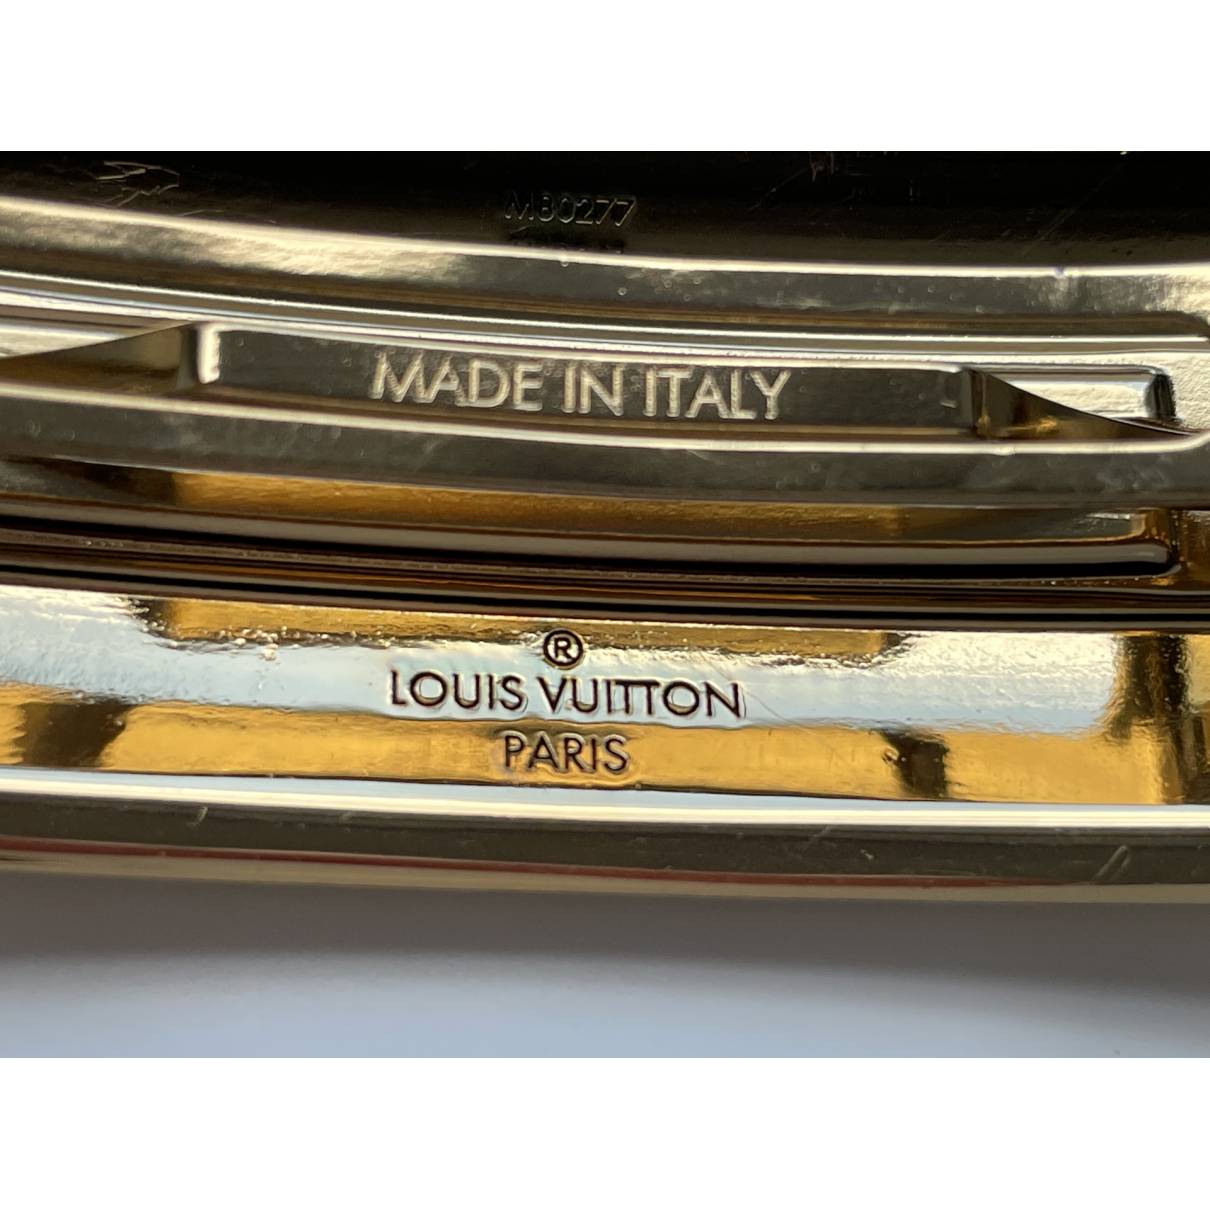 Louis Vuitton unboxing - Nanogram Hair Accessories SOLD OUT - asmr